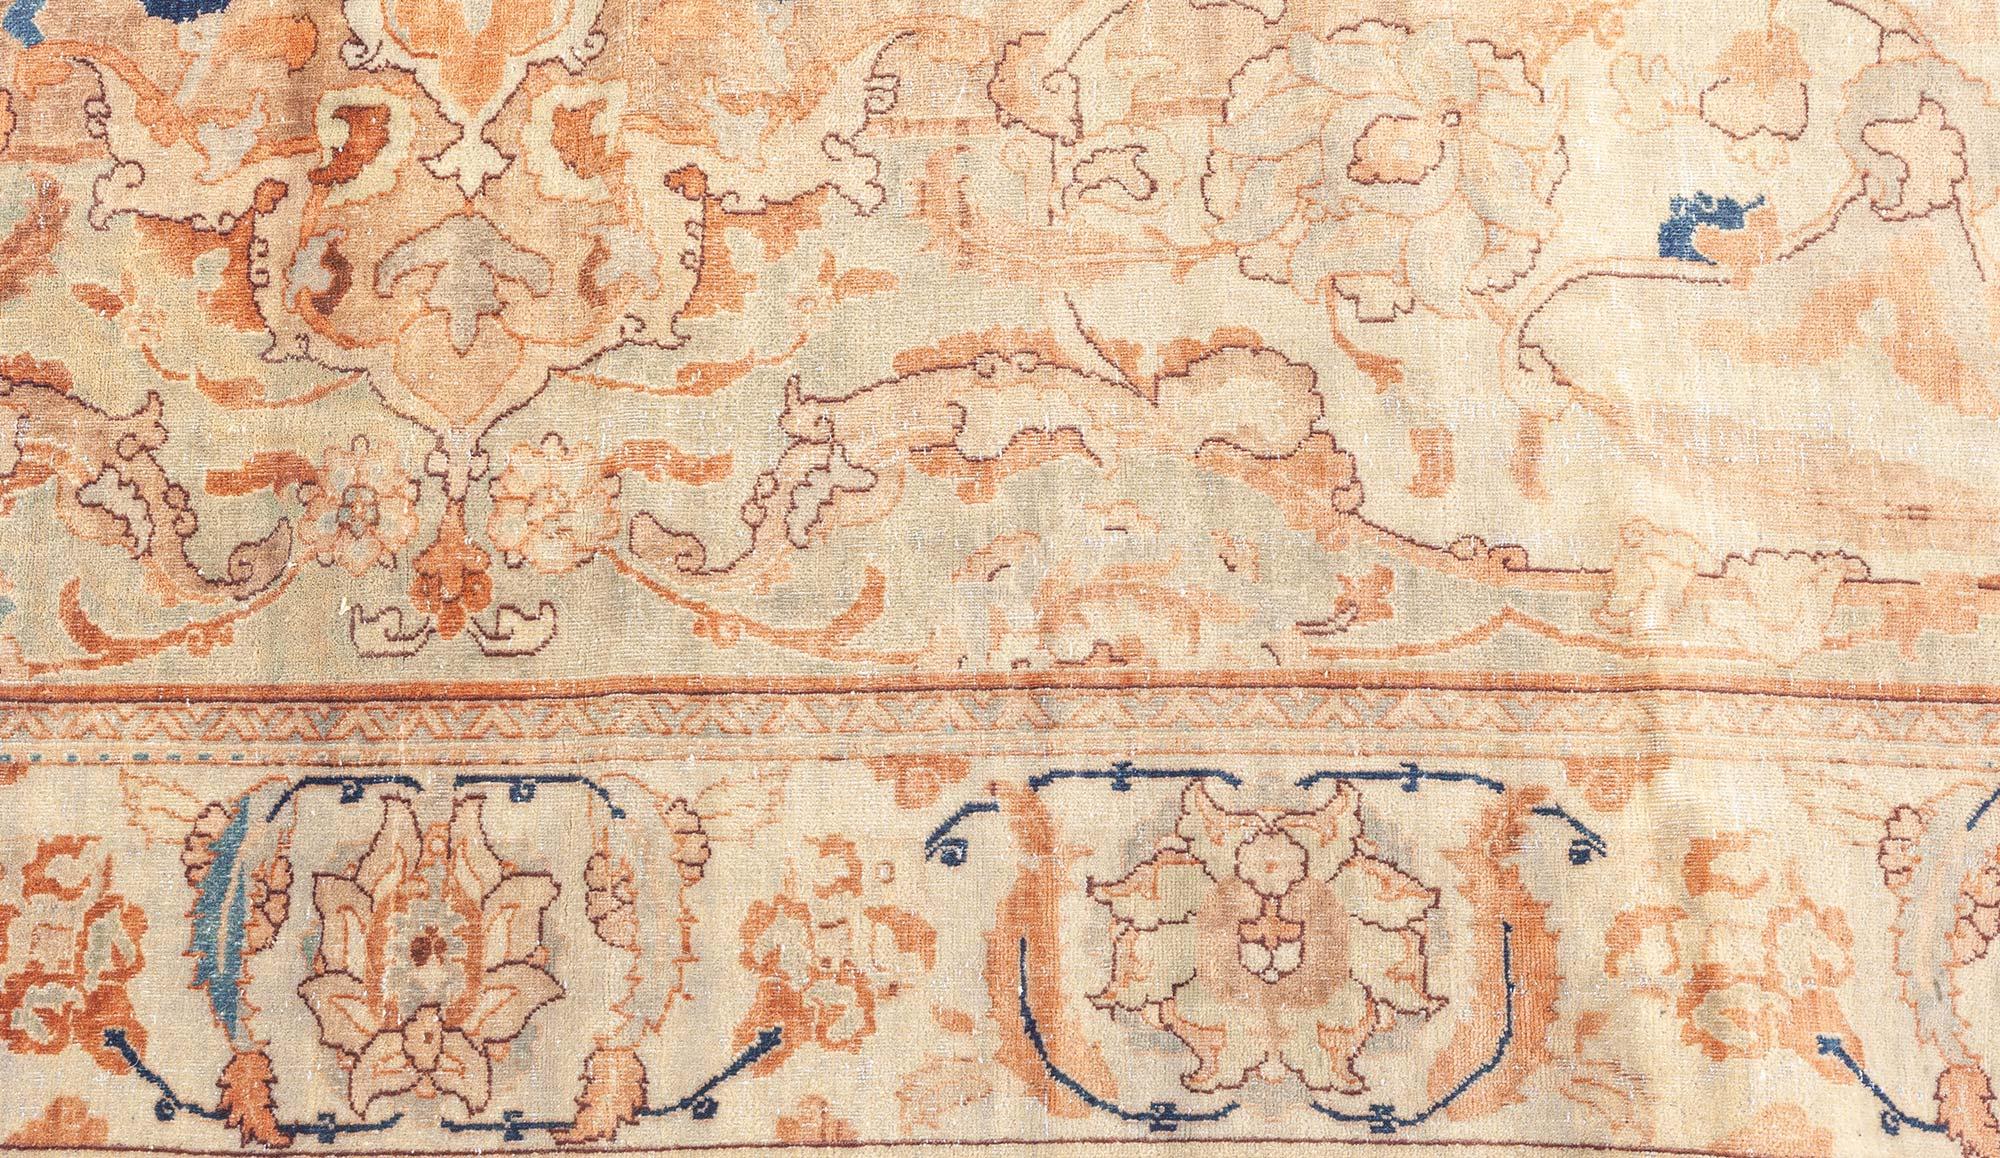 Early 20th century Persian Tabriz Botanic handmade wool rug
Size: 4'6